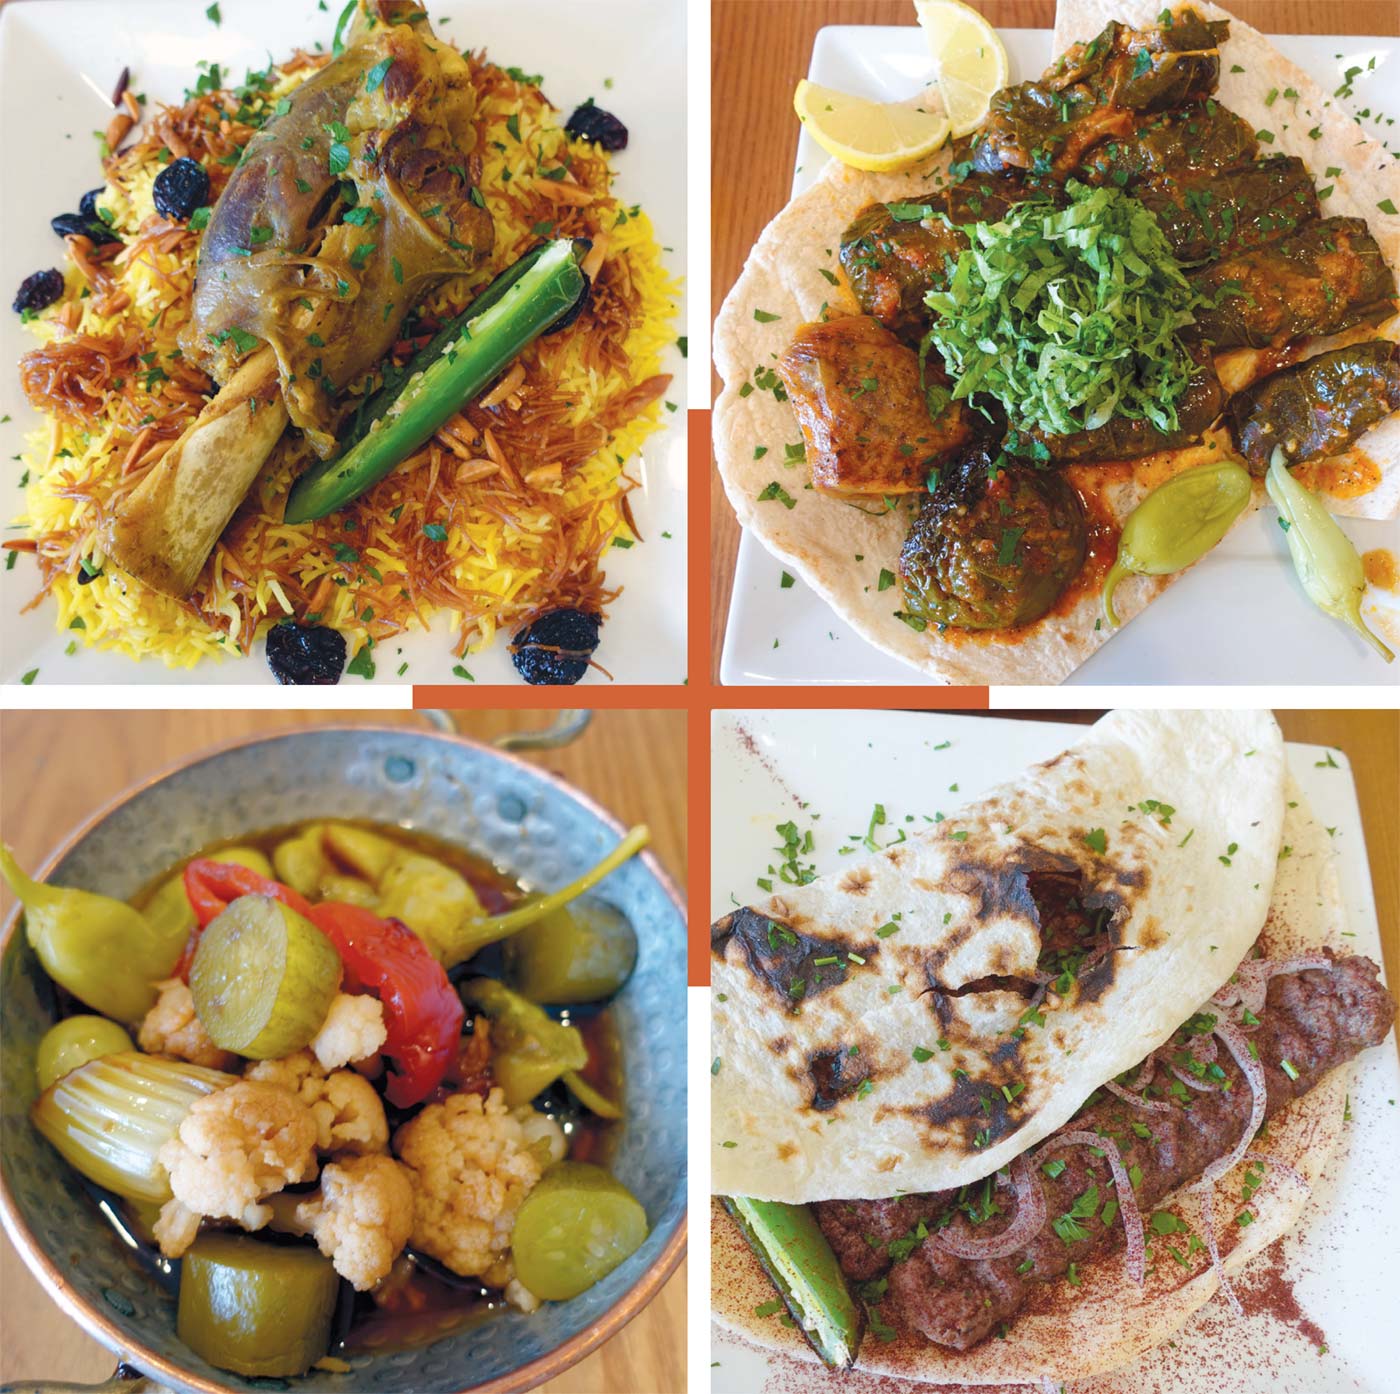 Clockwise from top left: Ouzi, roasted lamb shank; Dolma; Iraqi Kebab; pickles